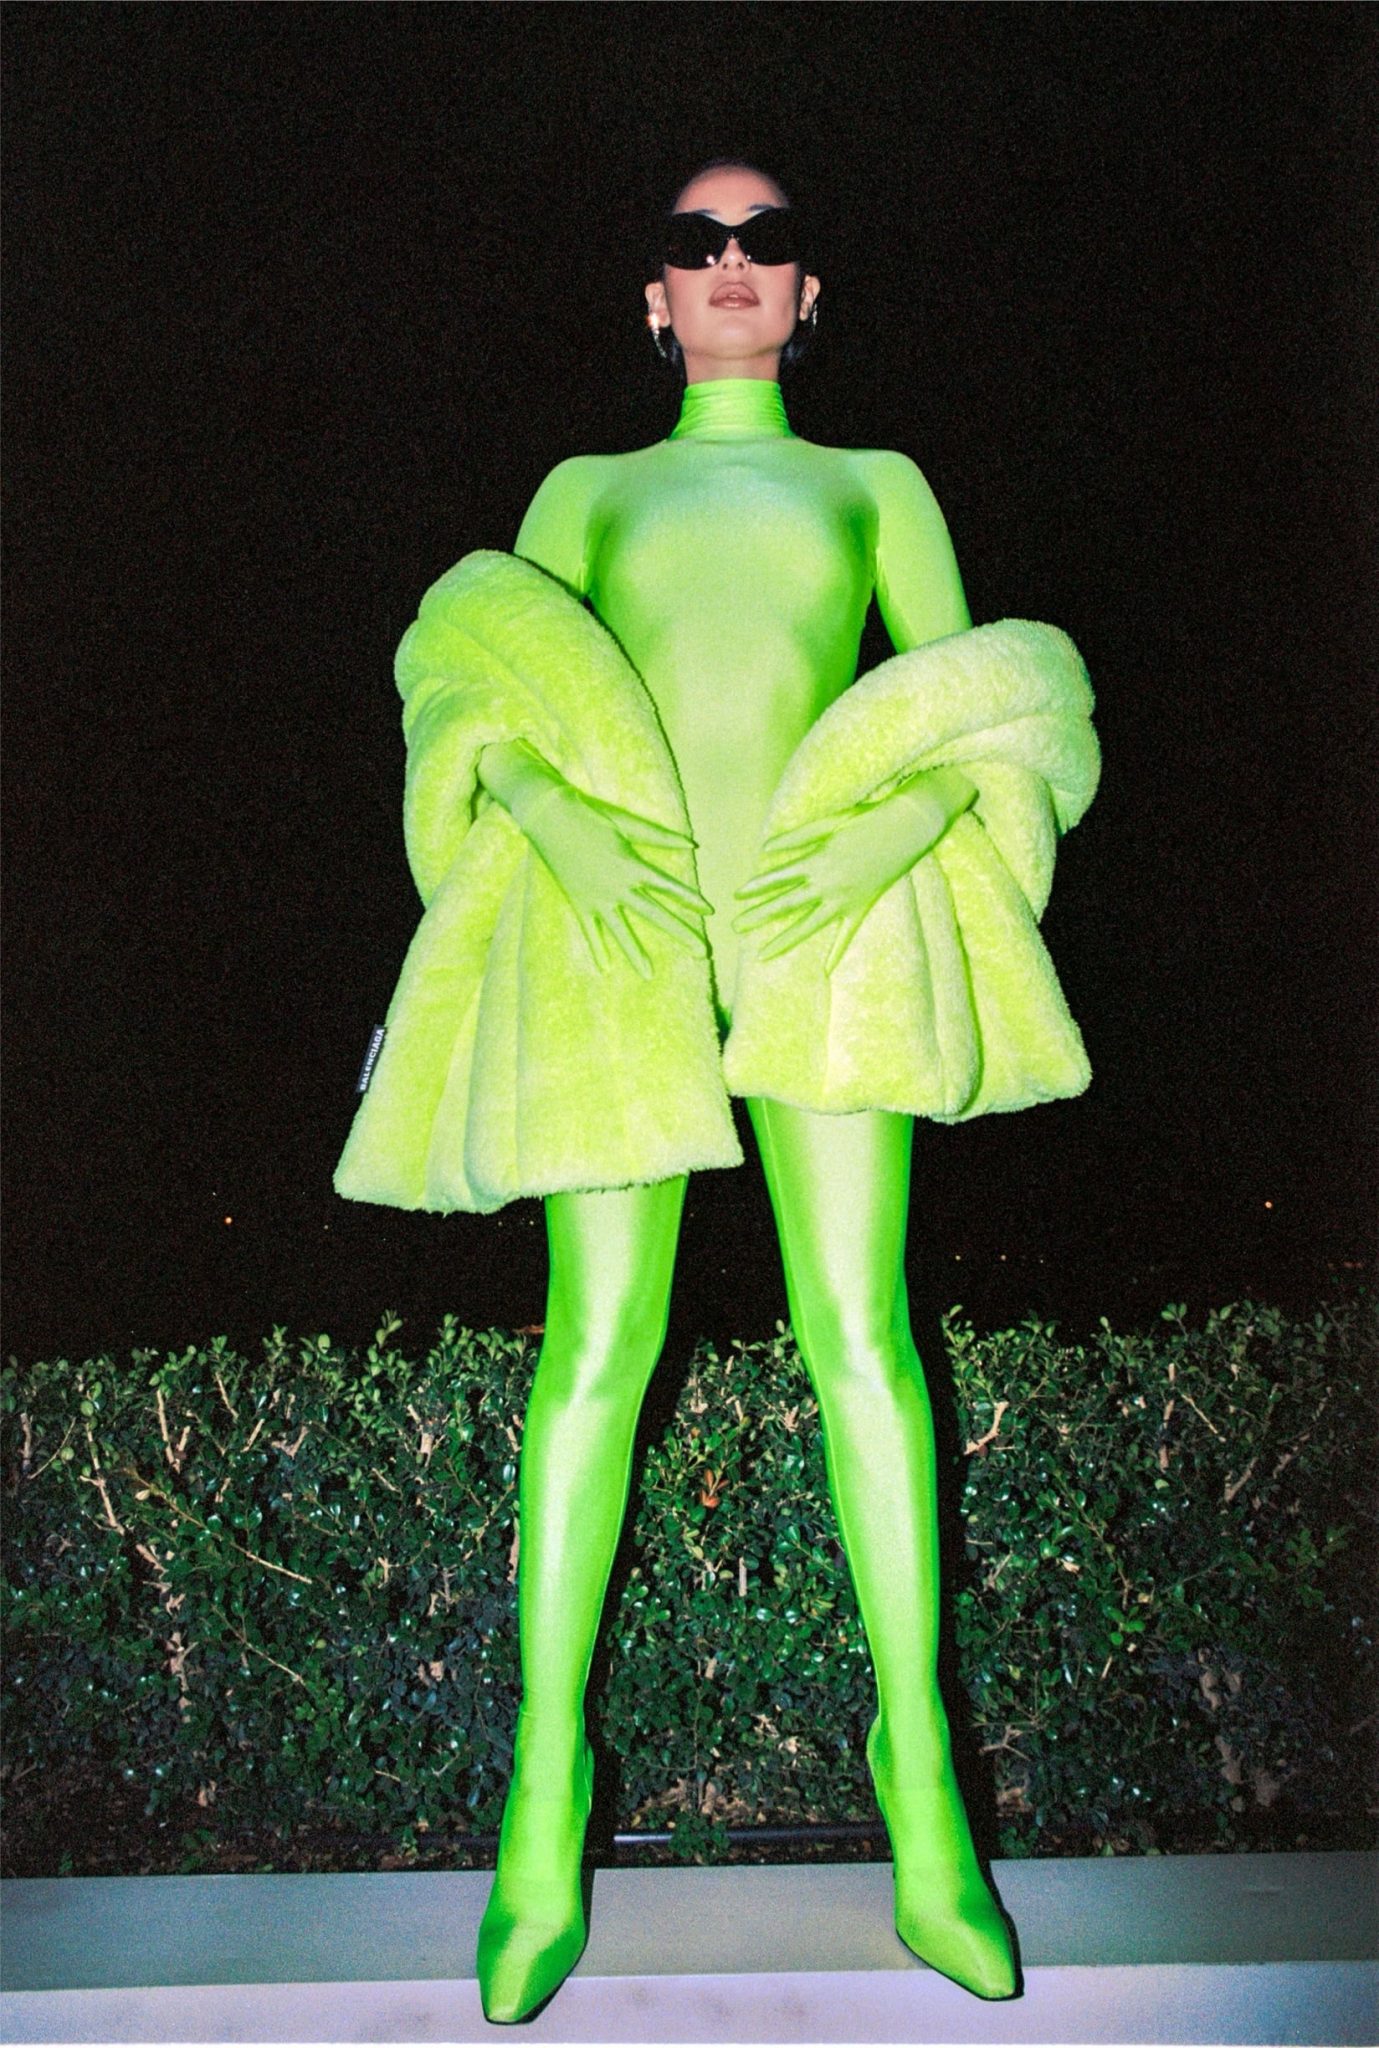 Alexa Demie wearing a green ensemble